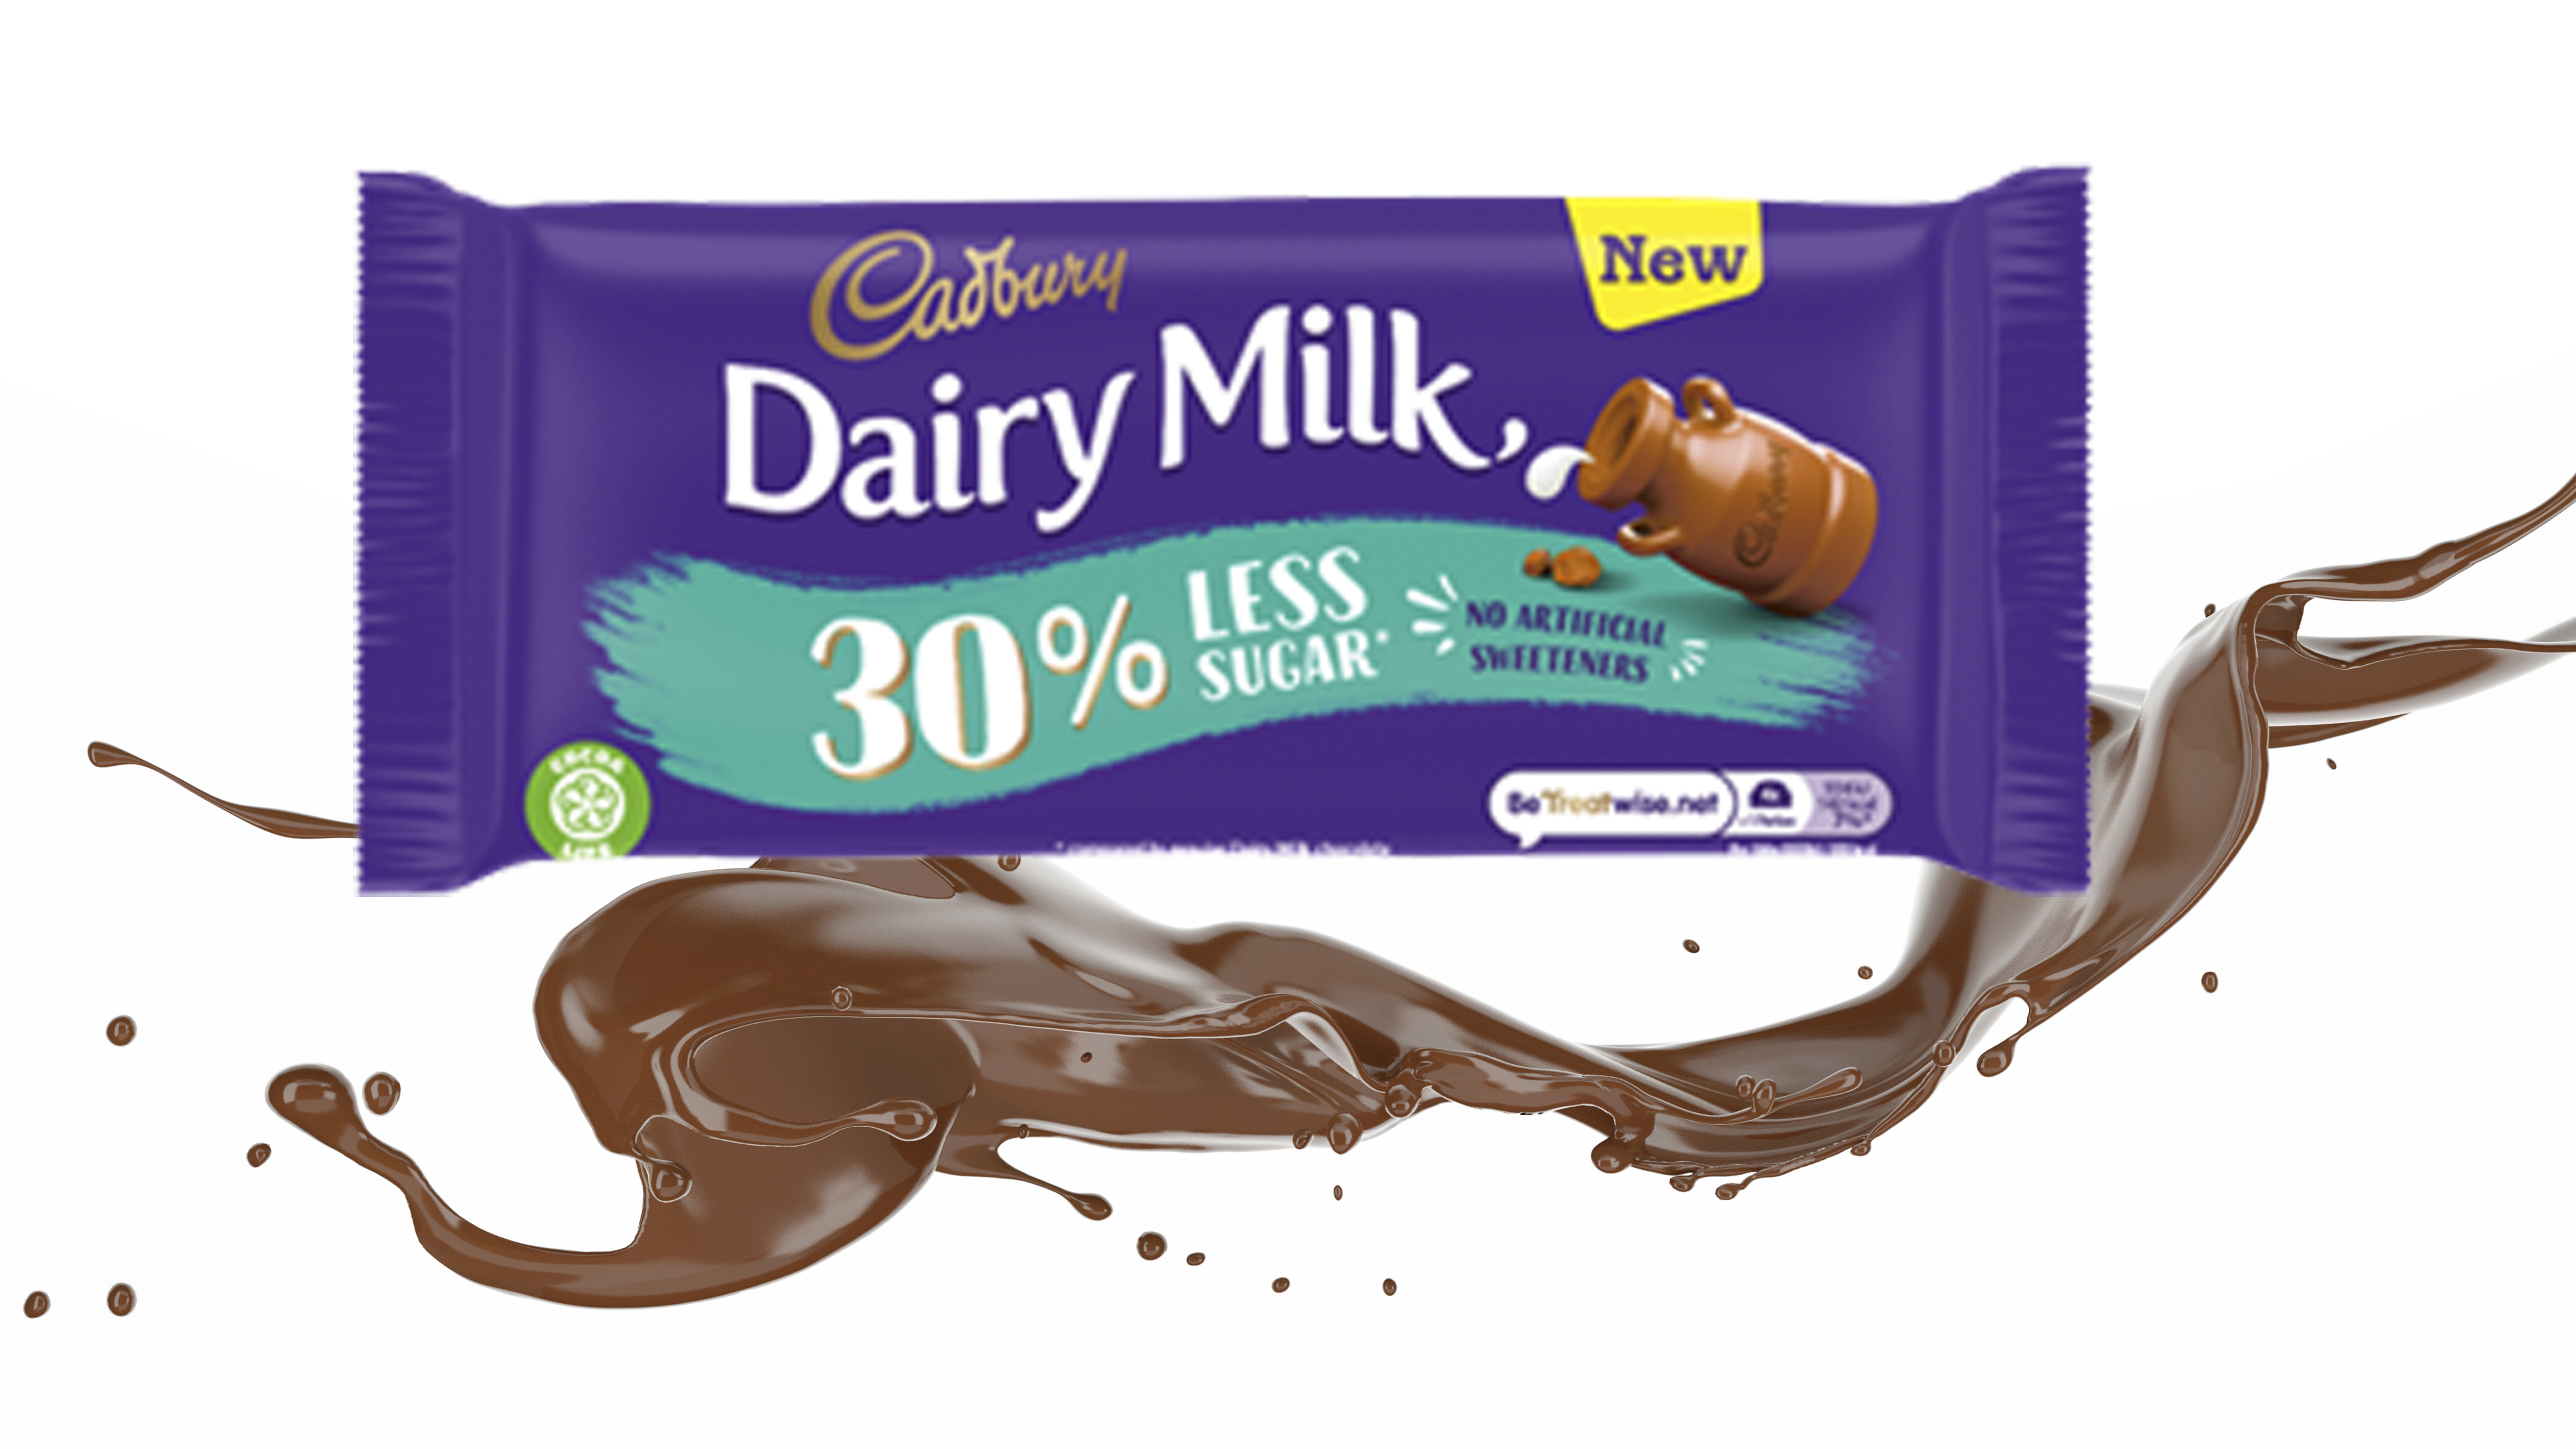 Cadbury's Flake chocolate bars don't melt and here's why